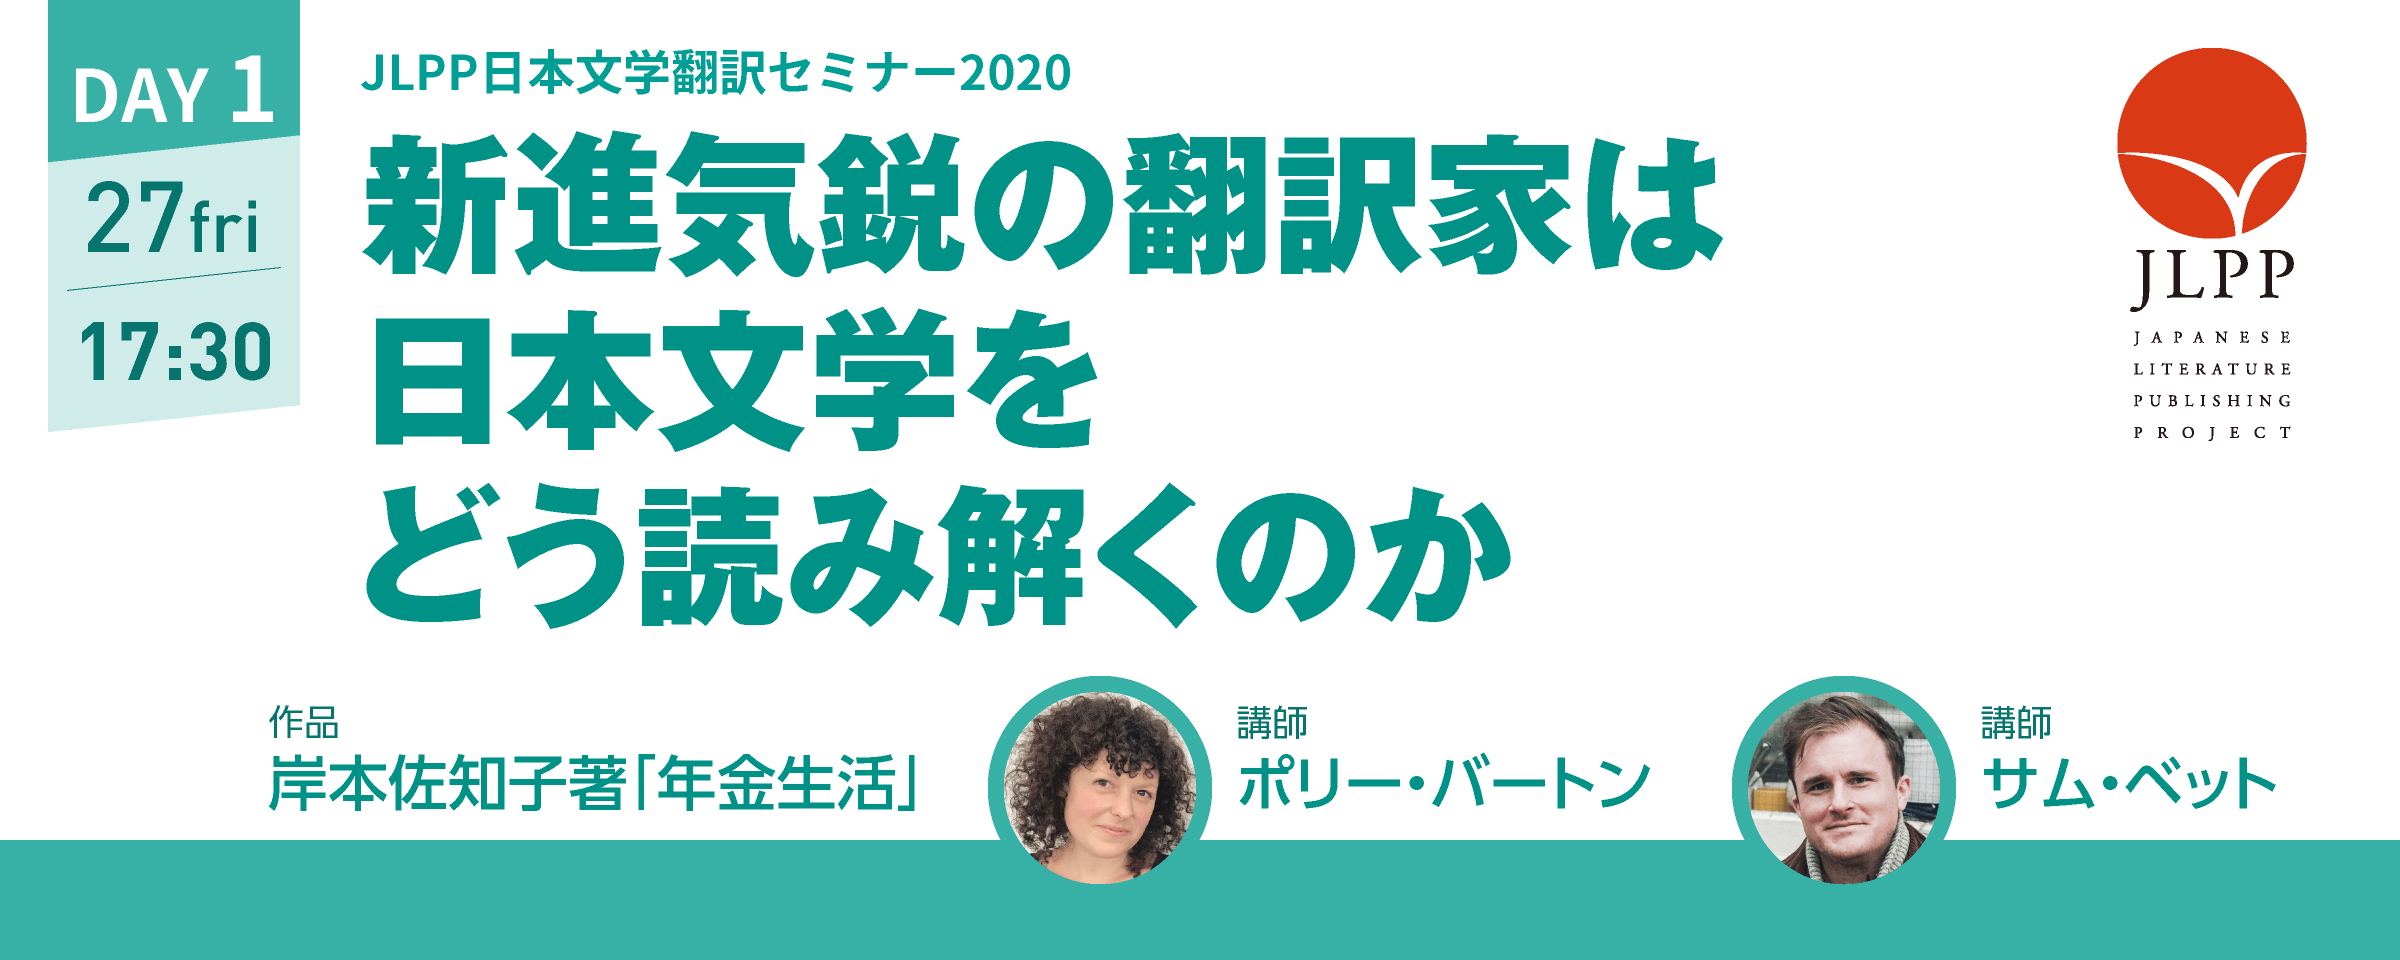 JLPP日本文学翻訳セミナー2020 新進気鋭の翻訳家は日本文学をどう読み解くのか